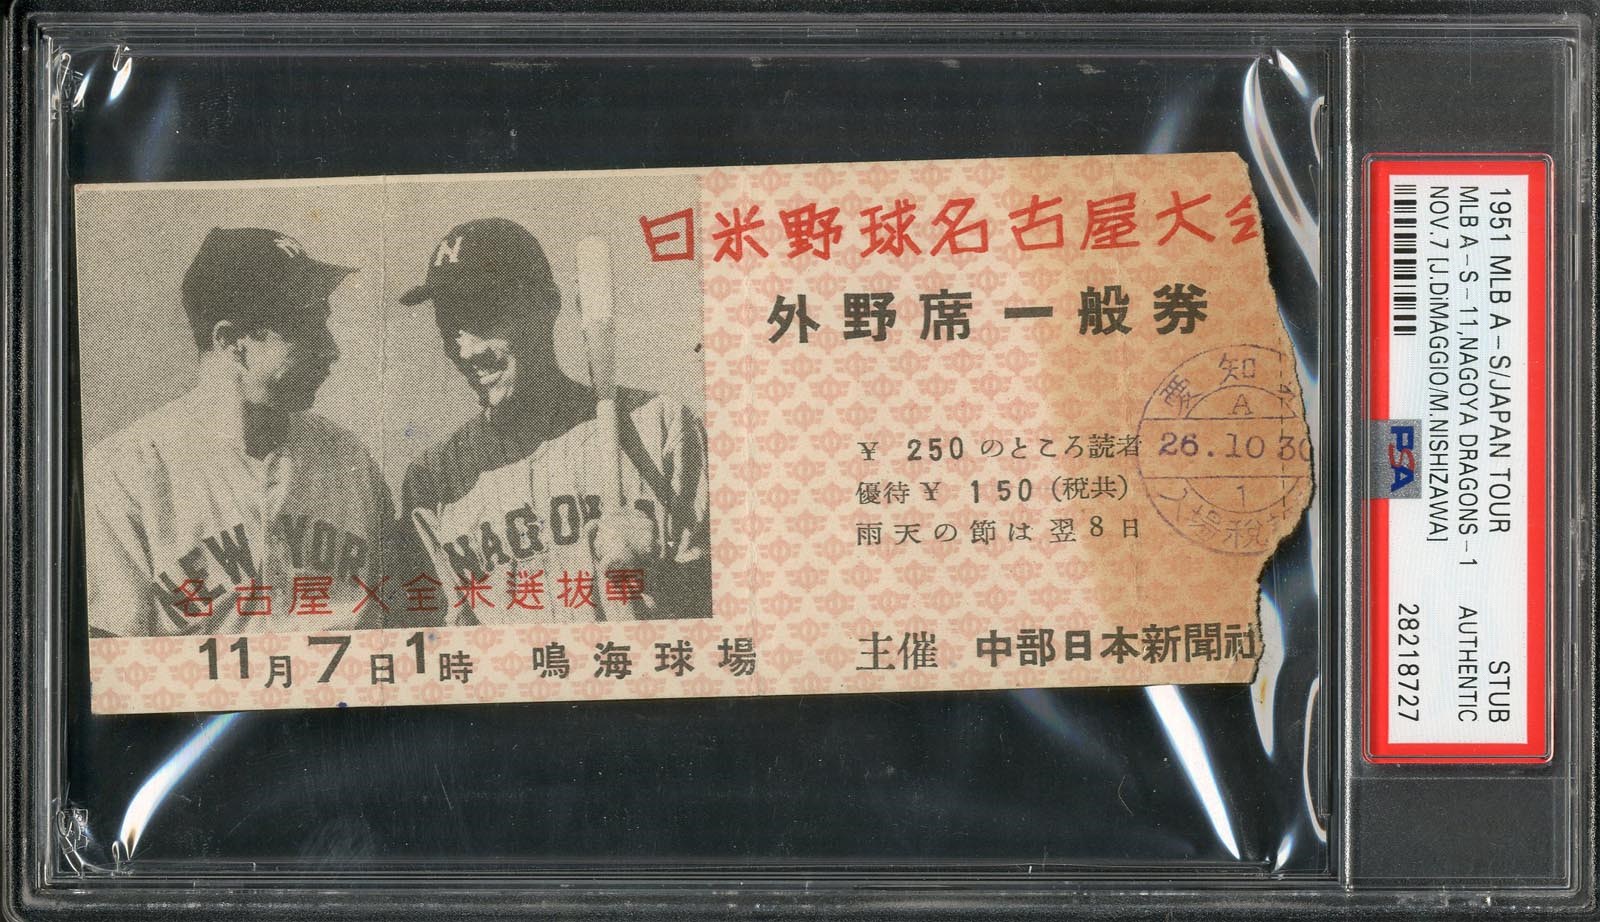 - Joe DiMaggio 1951 MLB All Stars Japan Tour Ticket Stub